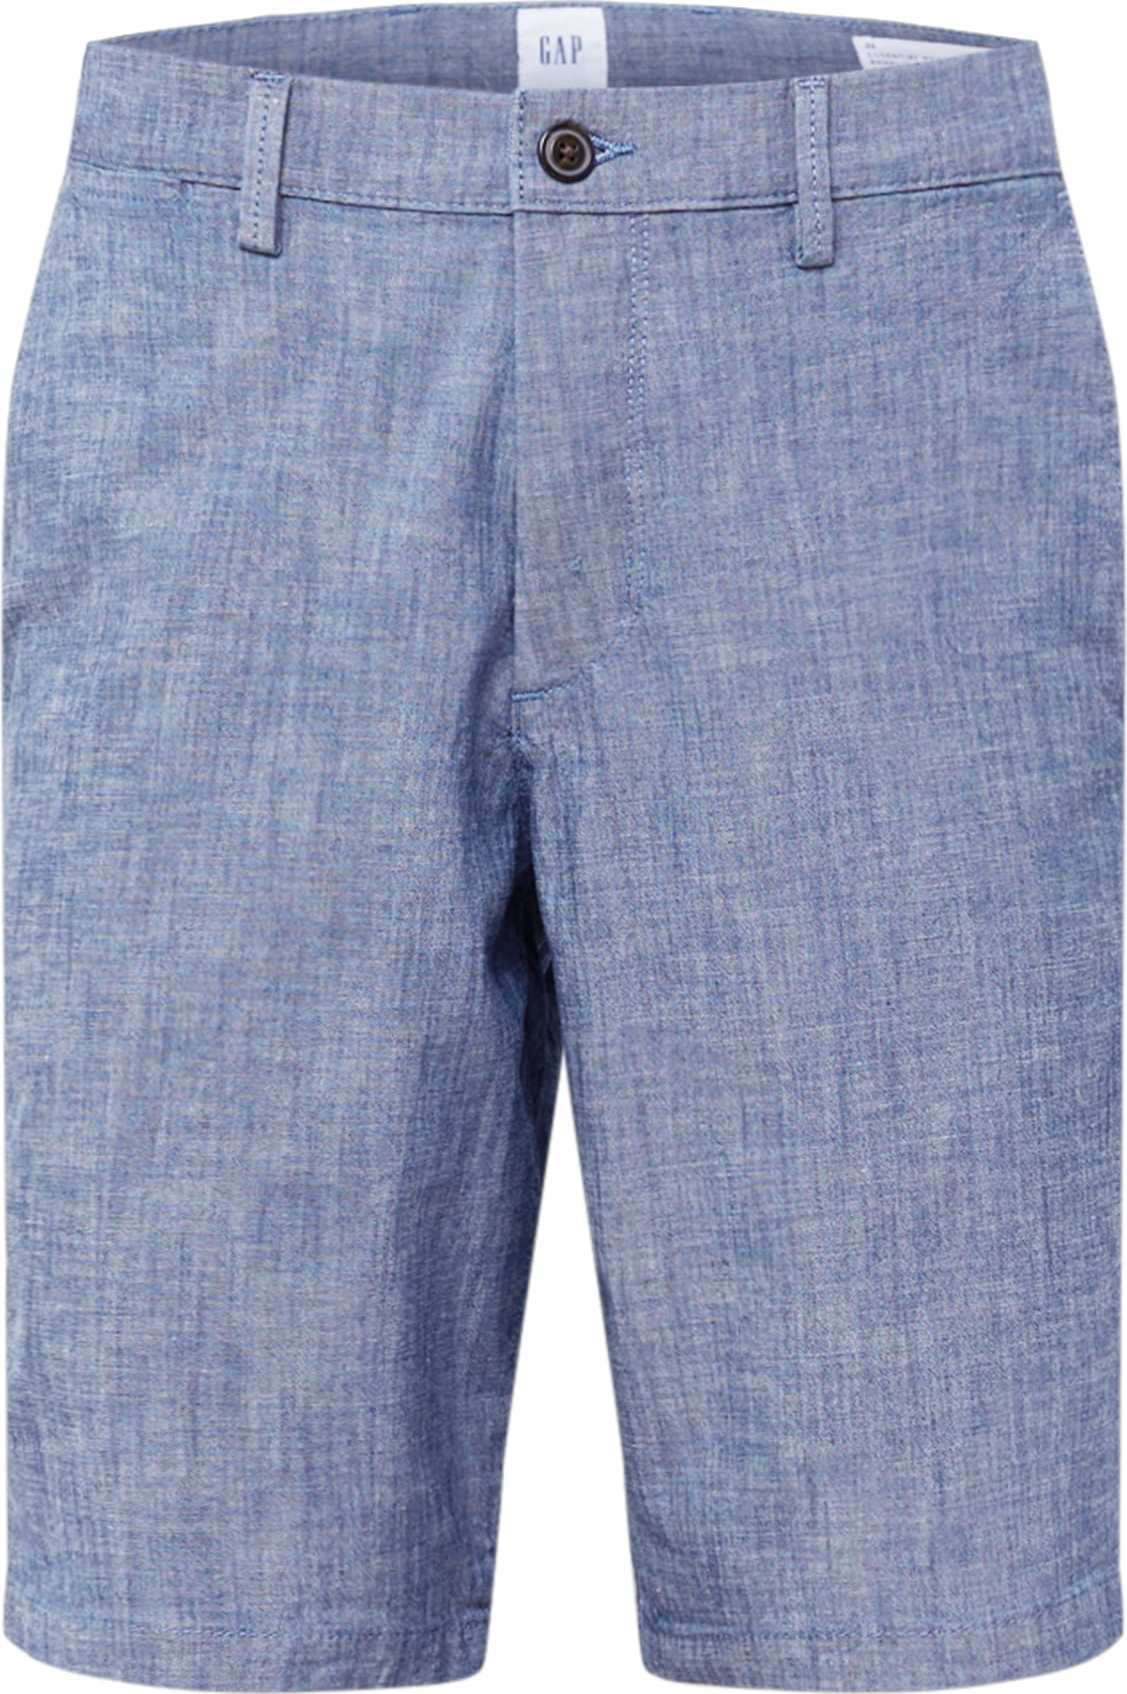 GAP Chino kalhoty modrý melír